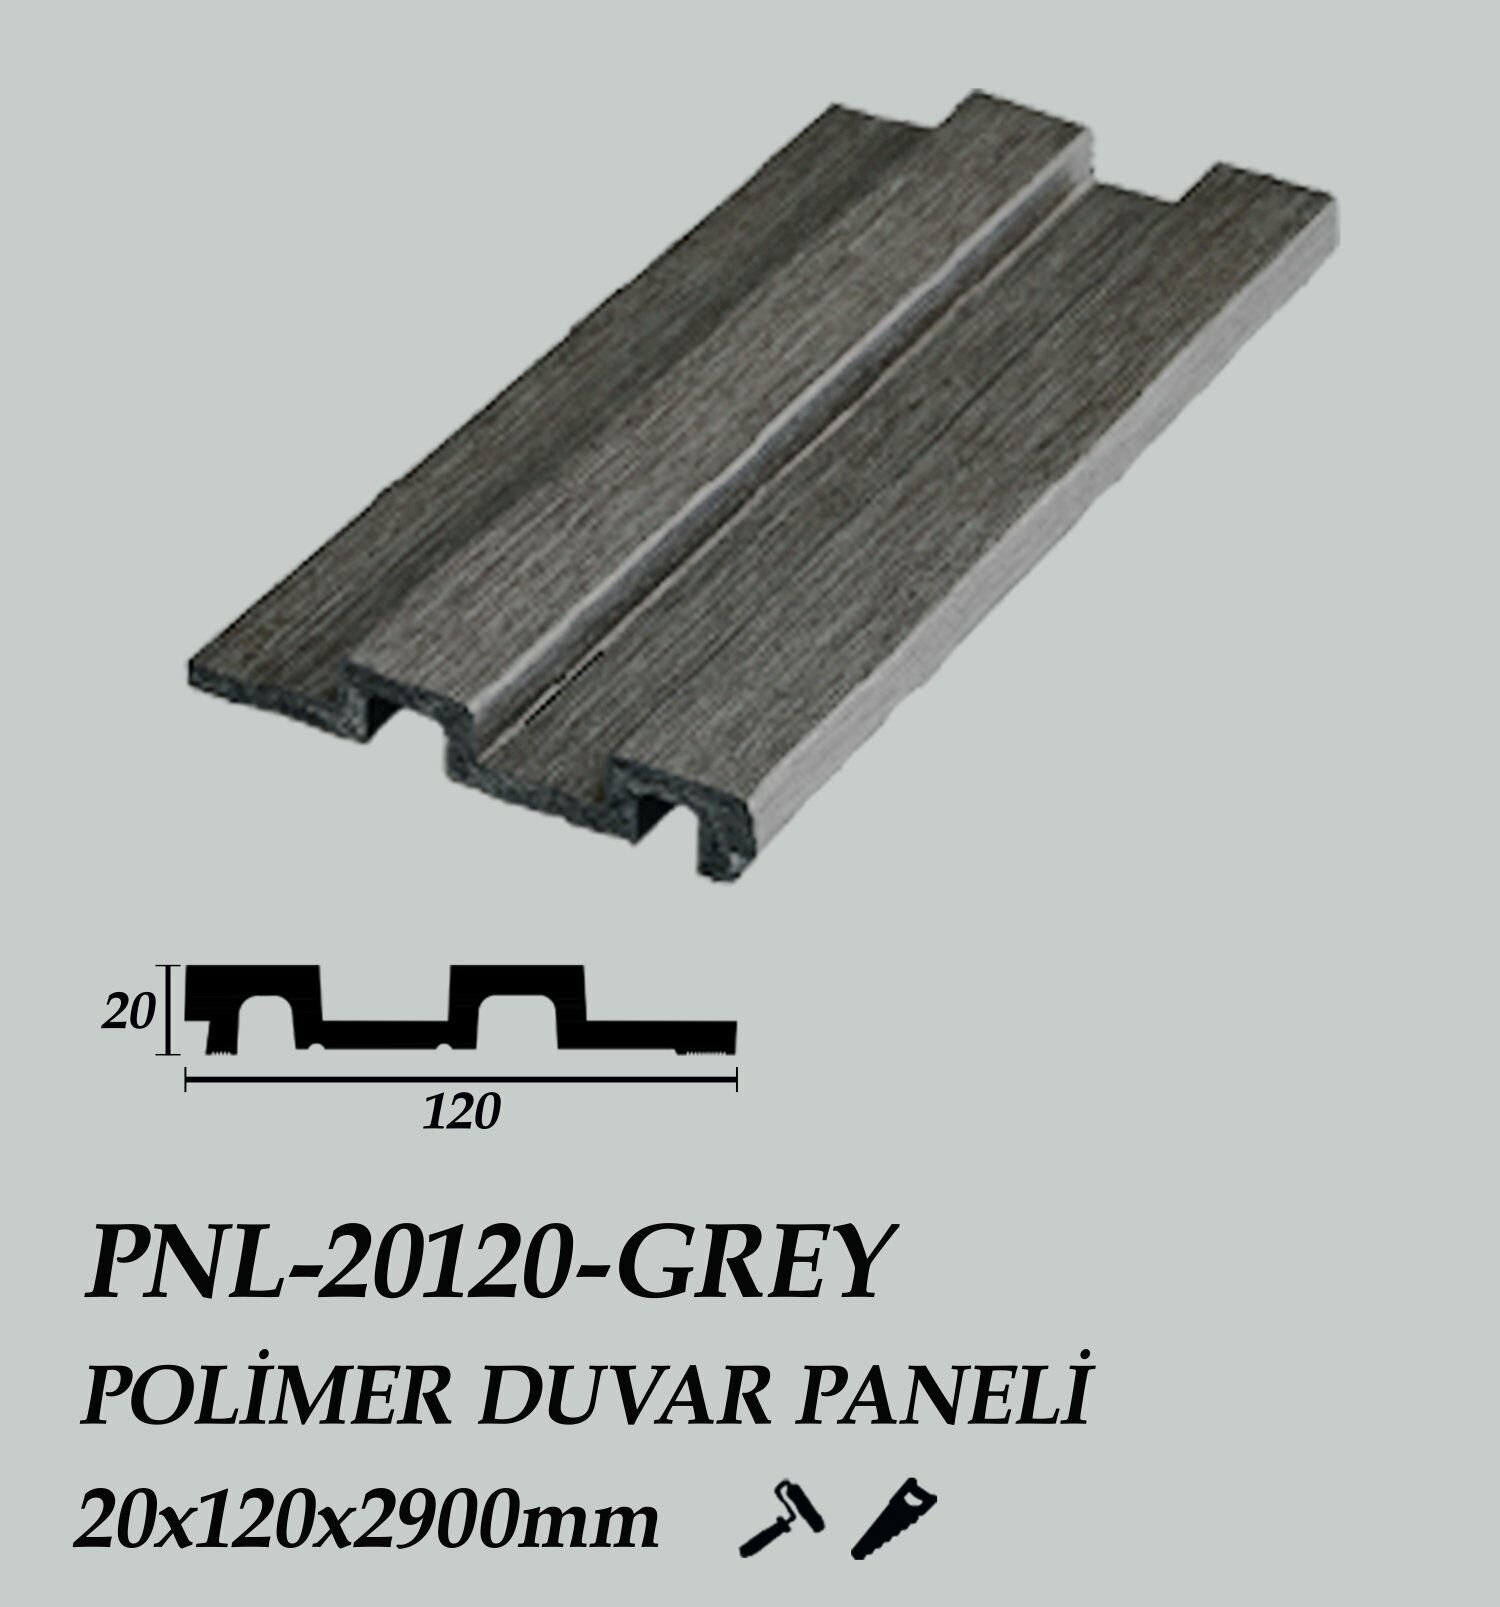 PNL-20120-GREY Polimer Duvar Paneli 20X120X2900mm